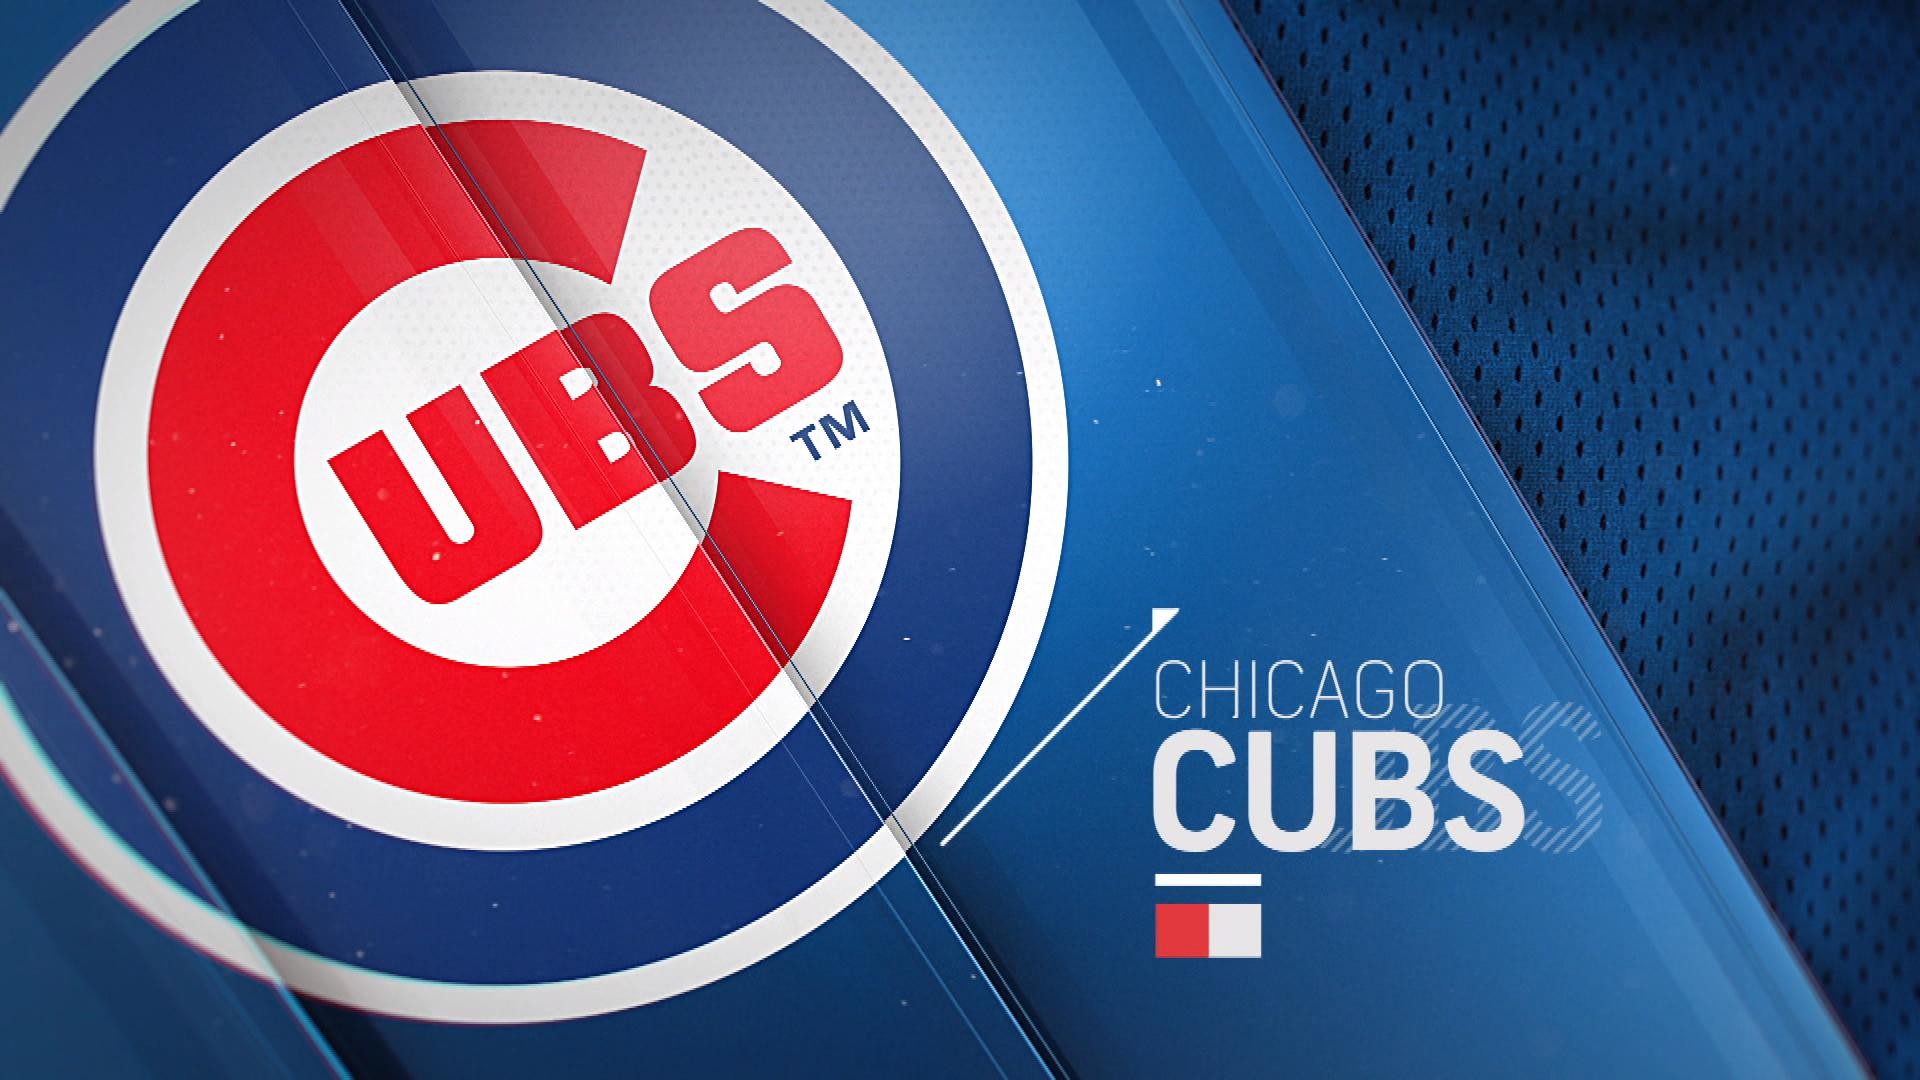 Chicago Cubs 2016 Postseason Wallpaper Image Gallery - Desktop Wallpaper Chicago Cubs - HD Wallpaper 